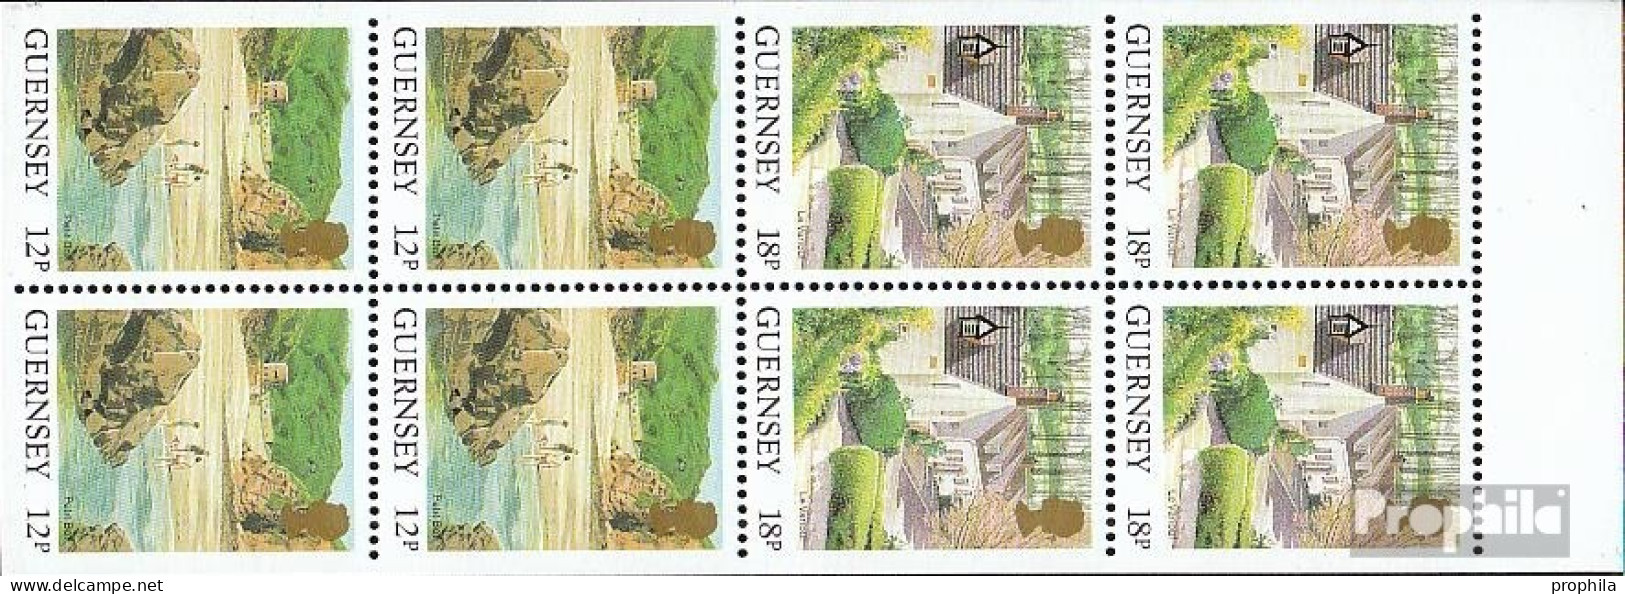 GB - Guernsey Hbl31 Postfrisch 1989 Ansichten - Guernesey